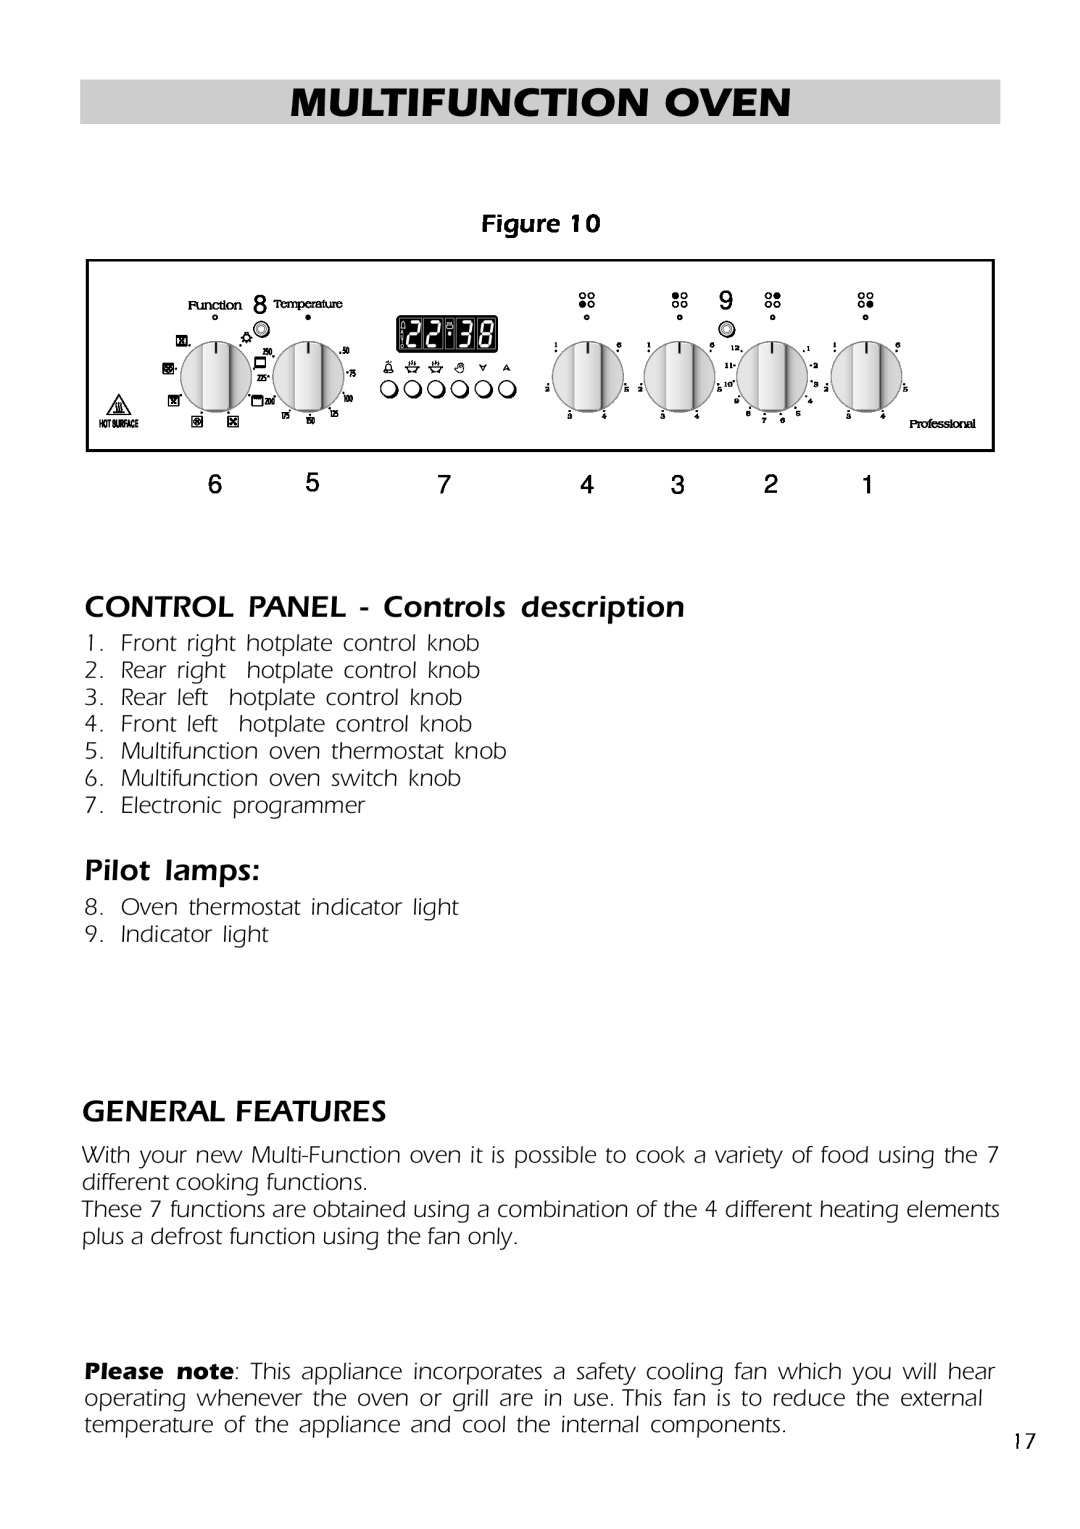 DeLonghi D 61 E manual Multifunction Oven, CONTROL PANEL - Controls description, Pilot lamps, General Features 